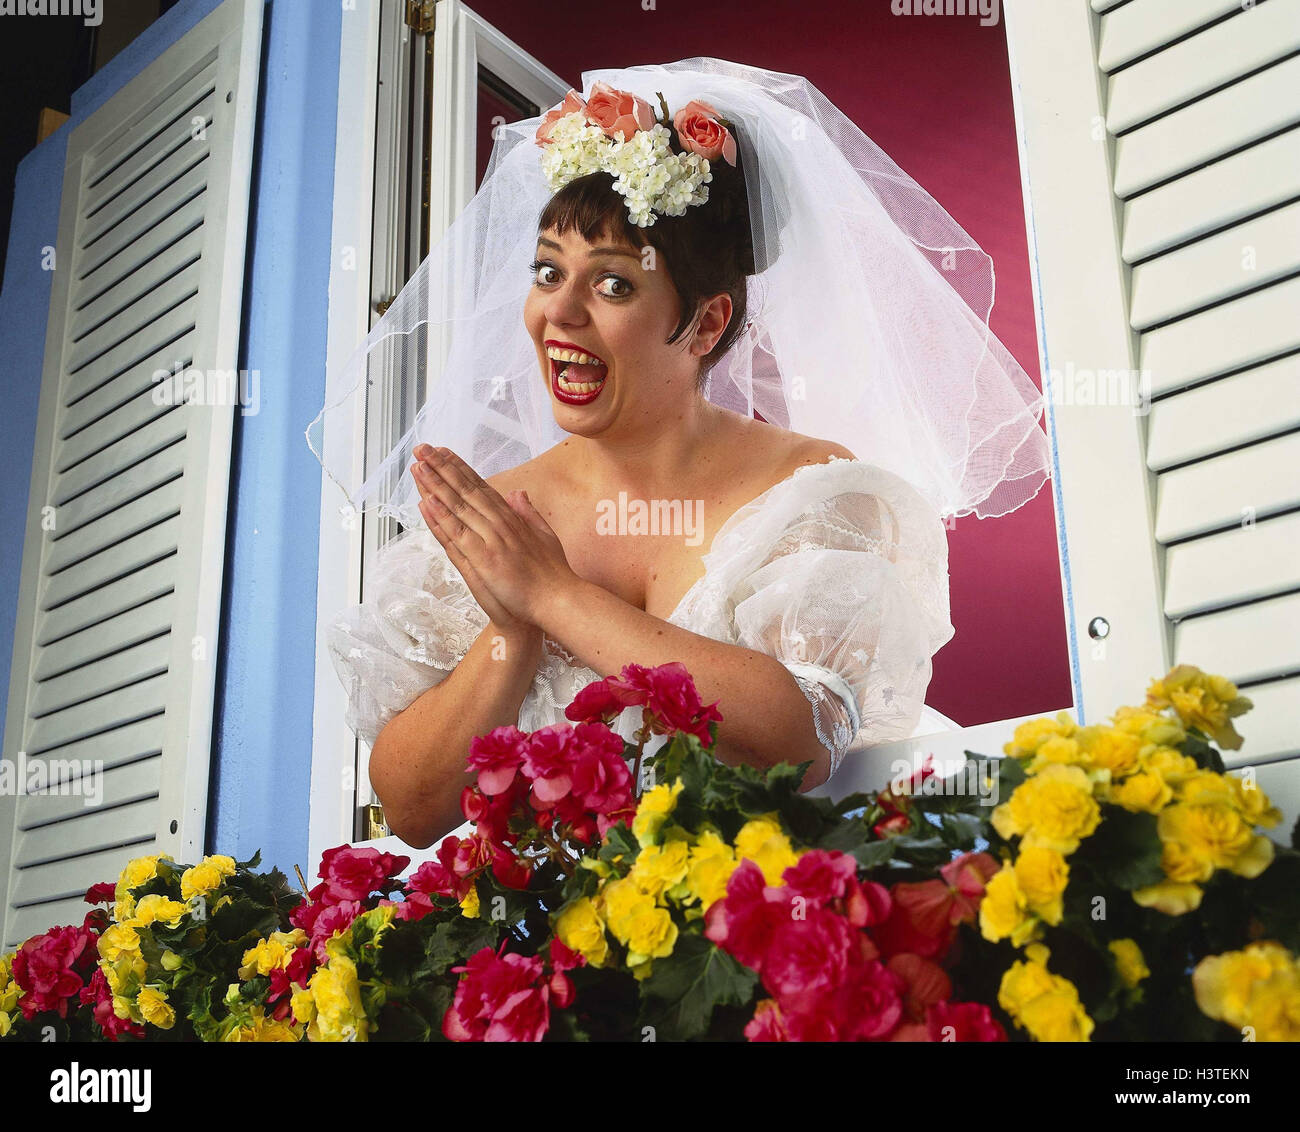 https://c8.alamy.com/comp/H3TEKN/window-floral-decoration-bride-gesture-joy-heavy-weights-studio-woman-H3TEKN.jpg